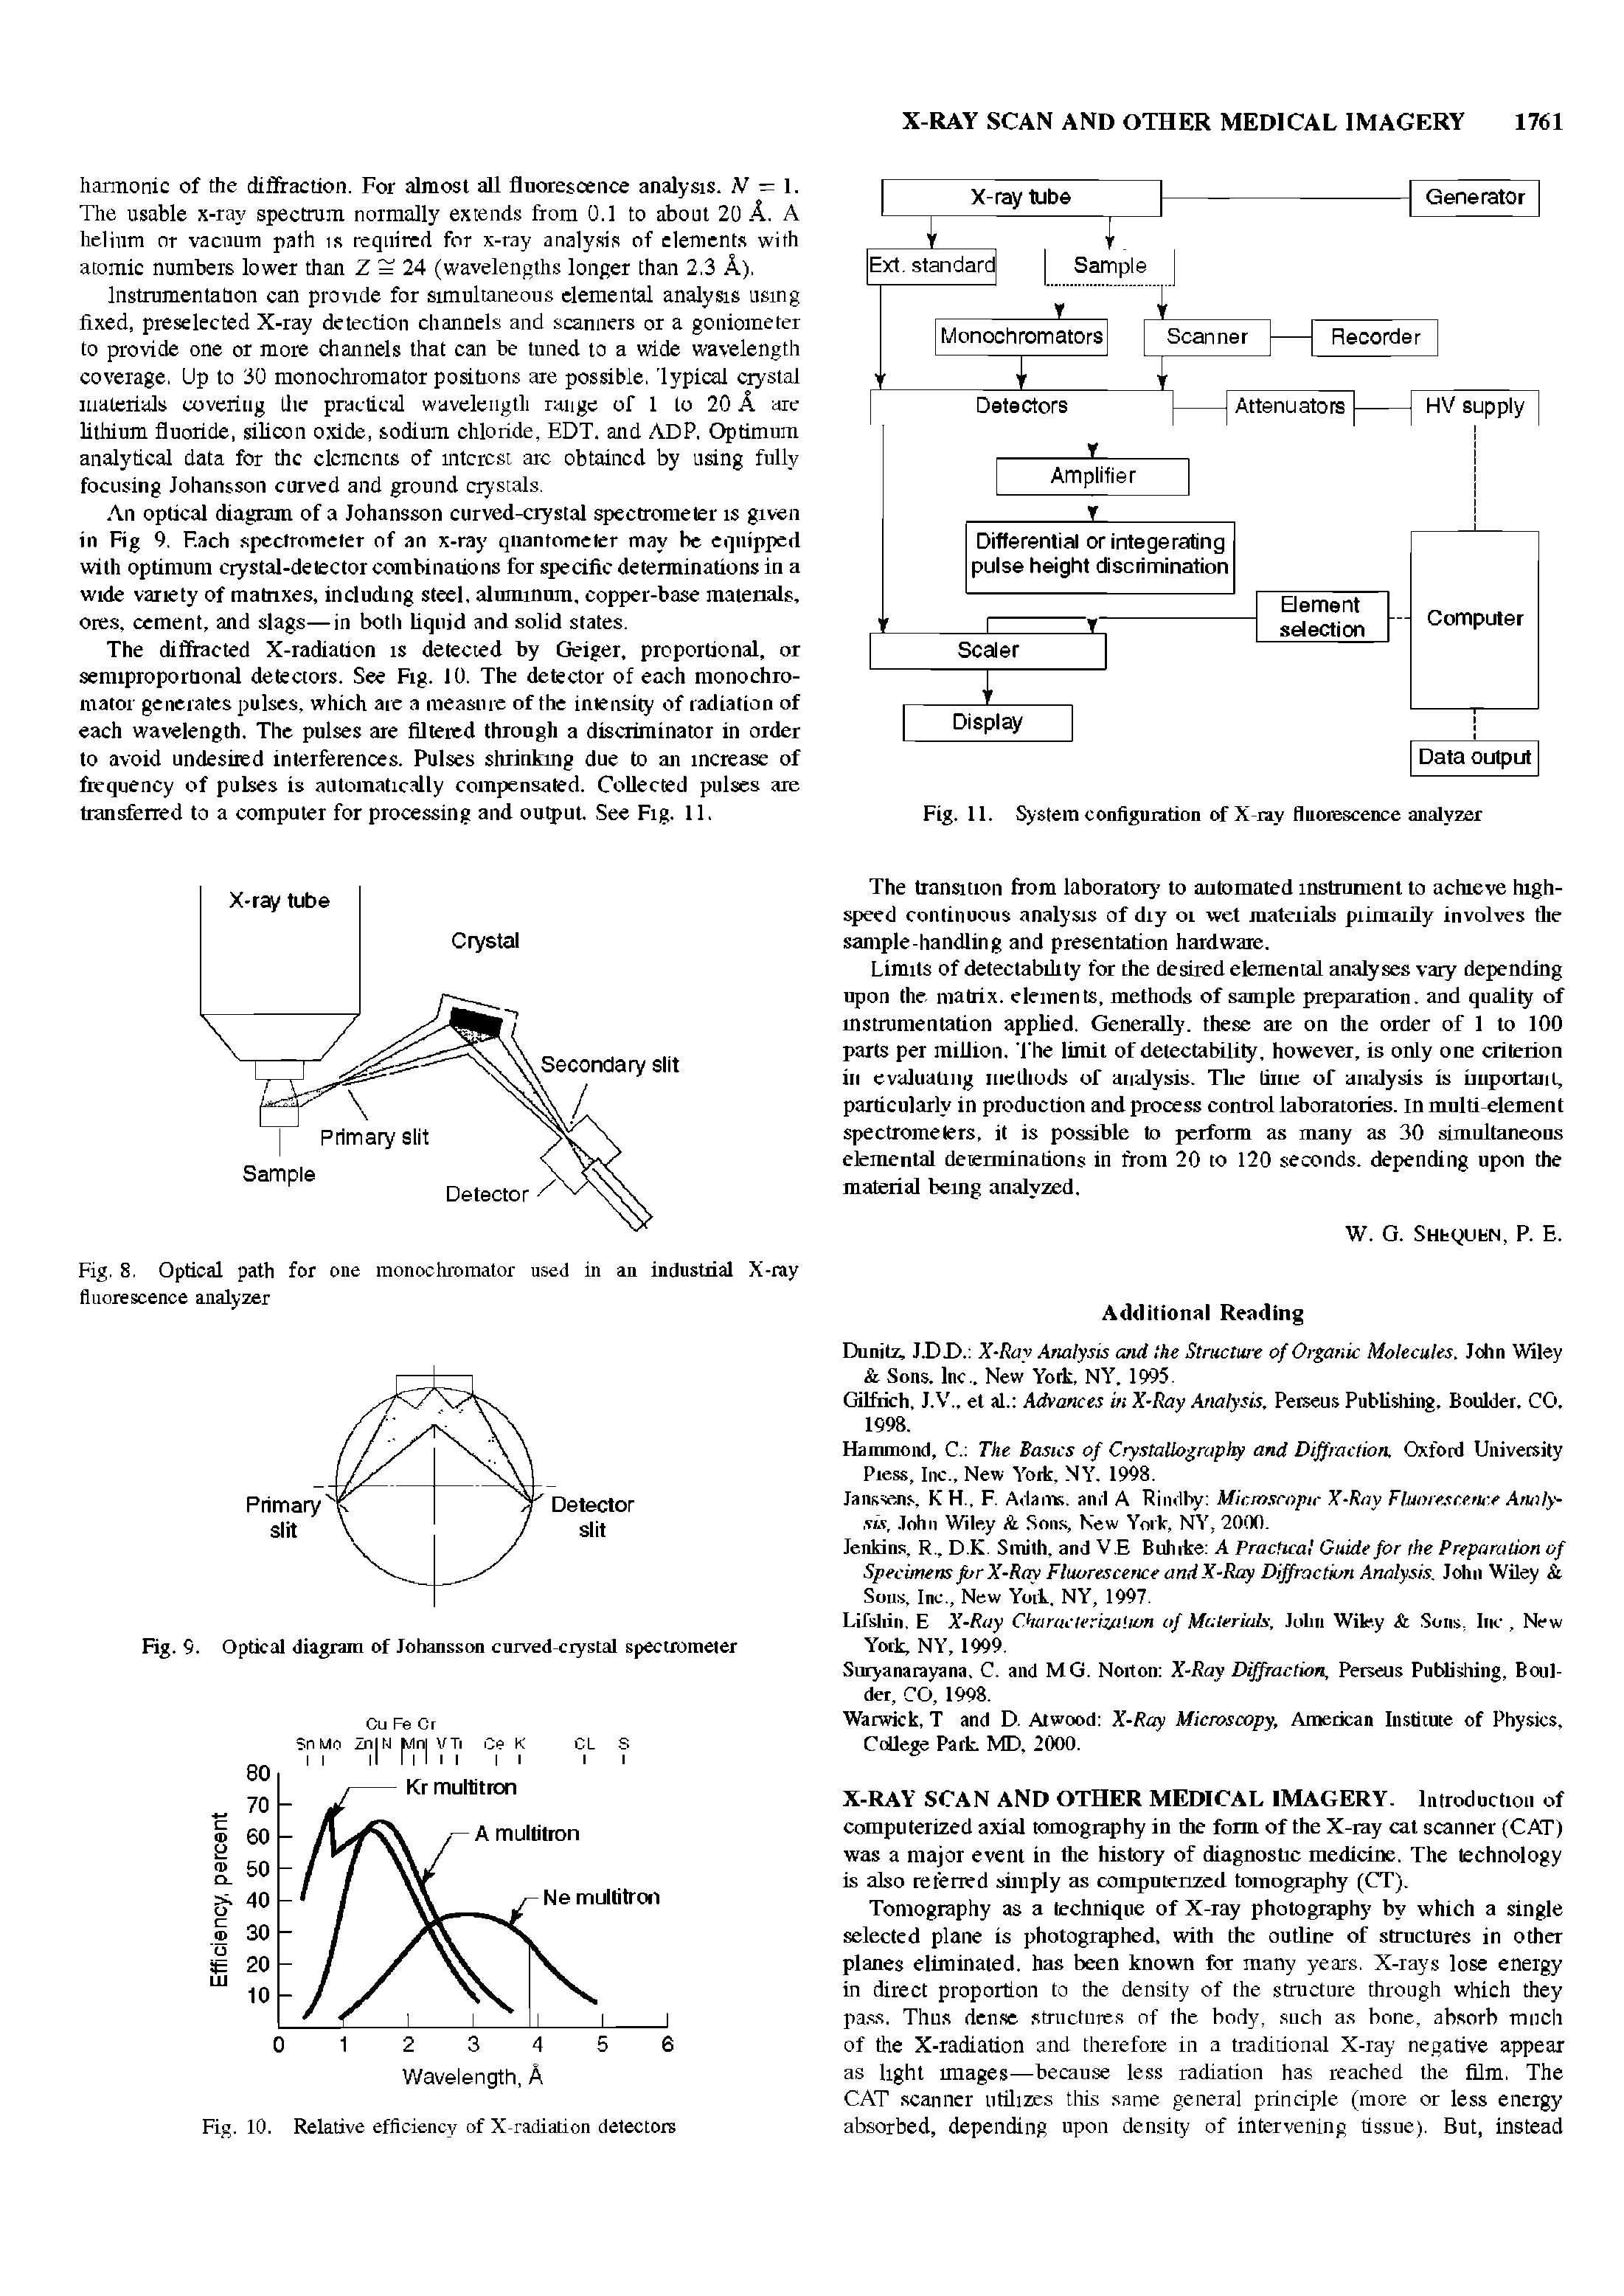 Fig. 9. Optical diagram of Johansson curved-crystal spectrometer...